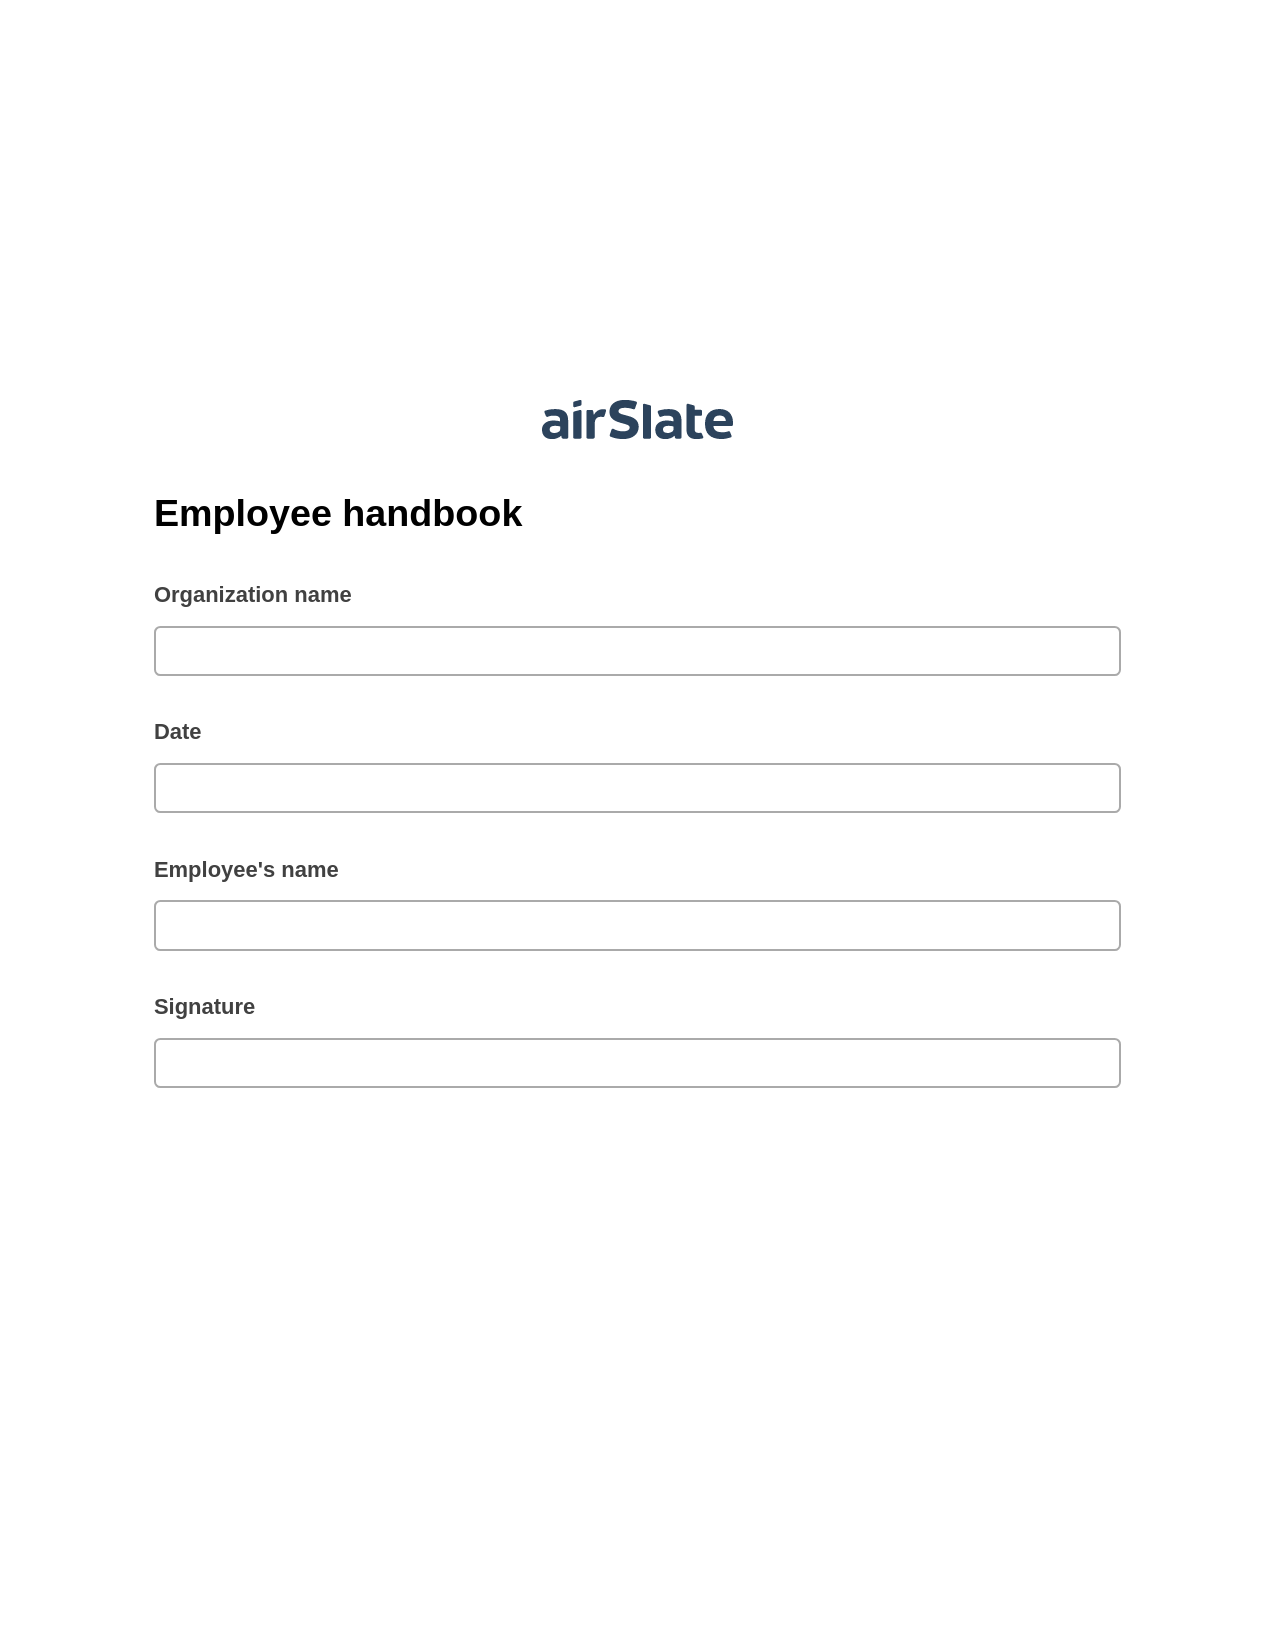 Employee handbook Pre-fill Slate from MS Dynamics 365 Records Bot, Document Hide Bot, OneDrive Bot